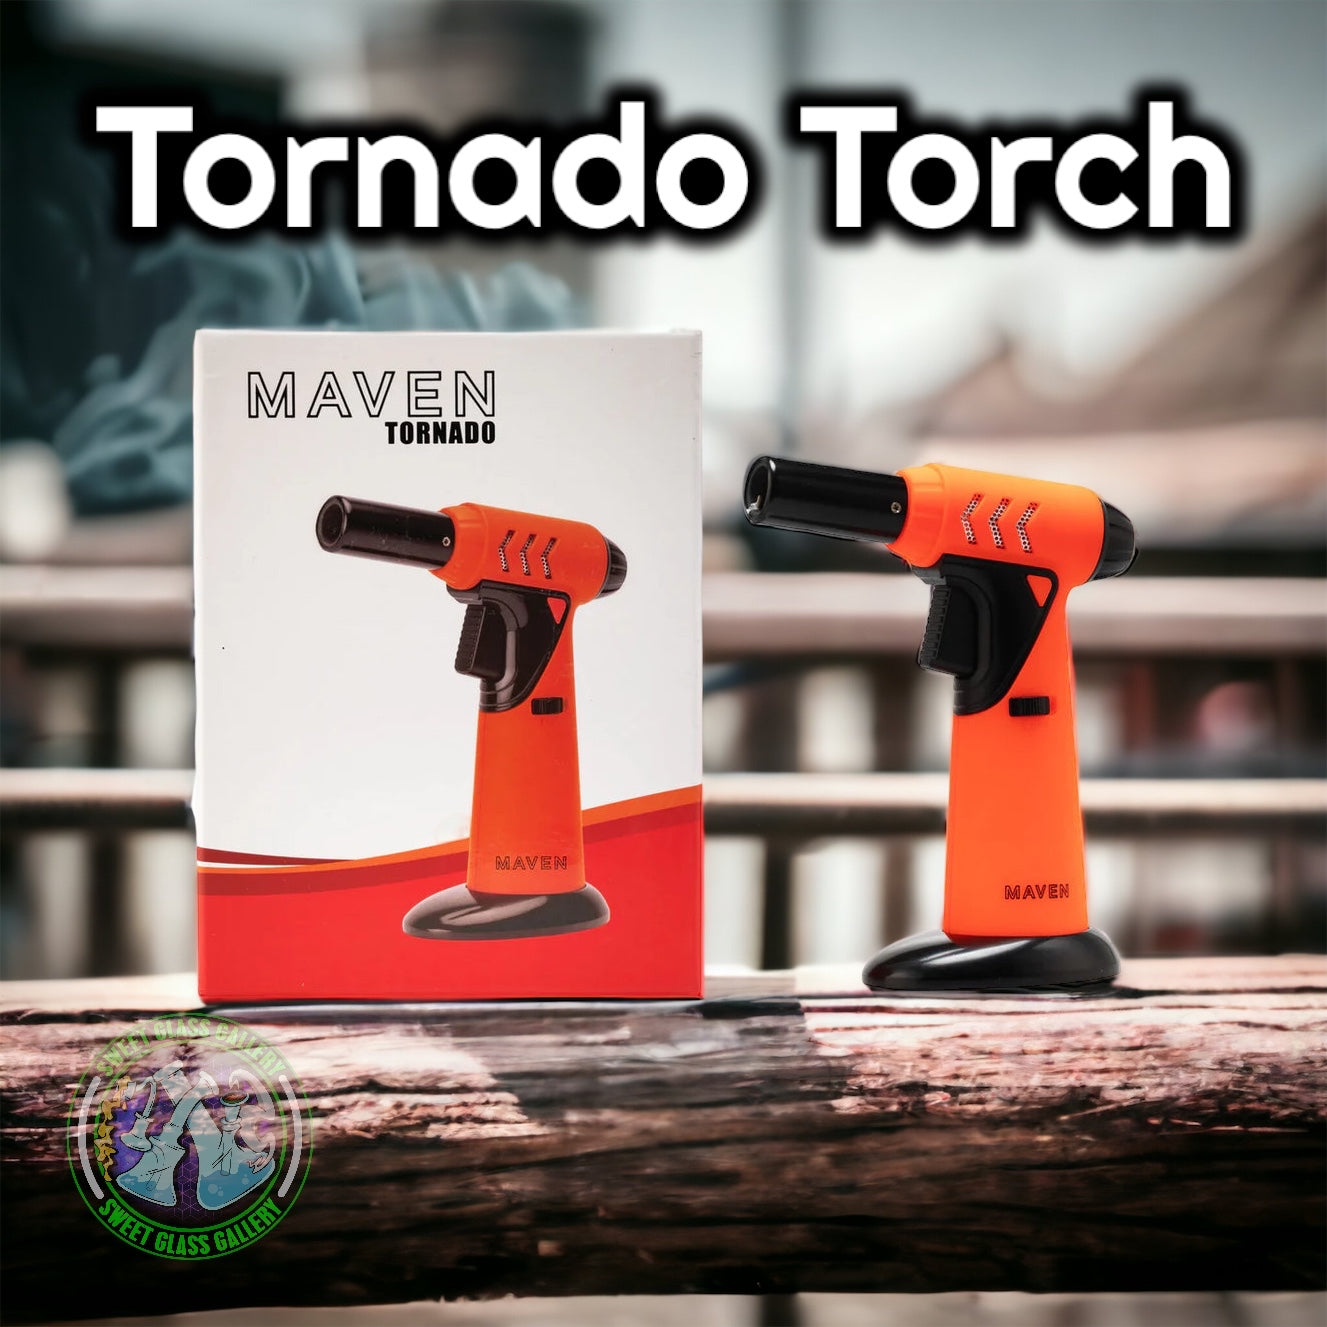 Maven - Tornado Torch